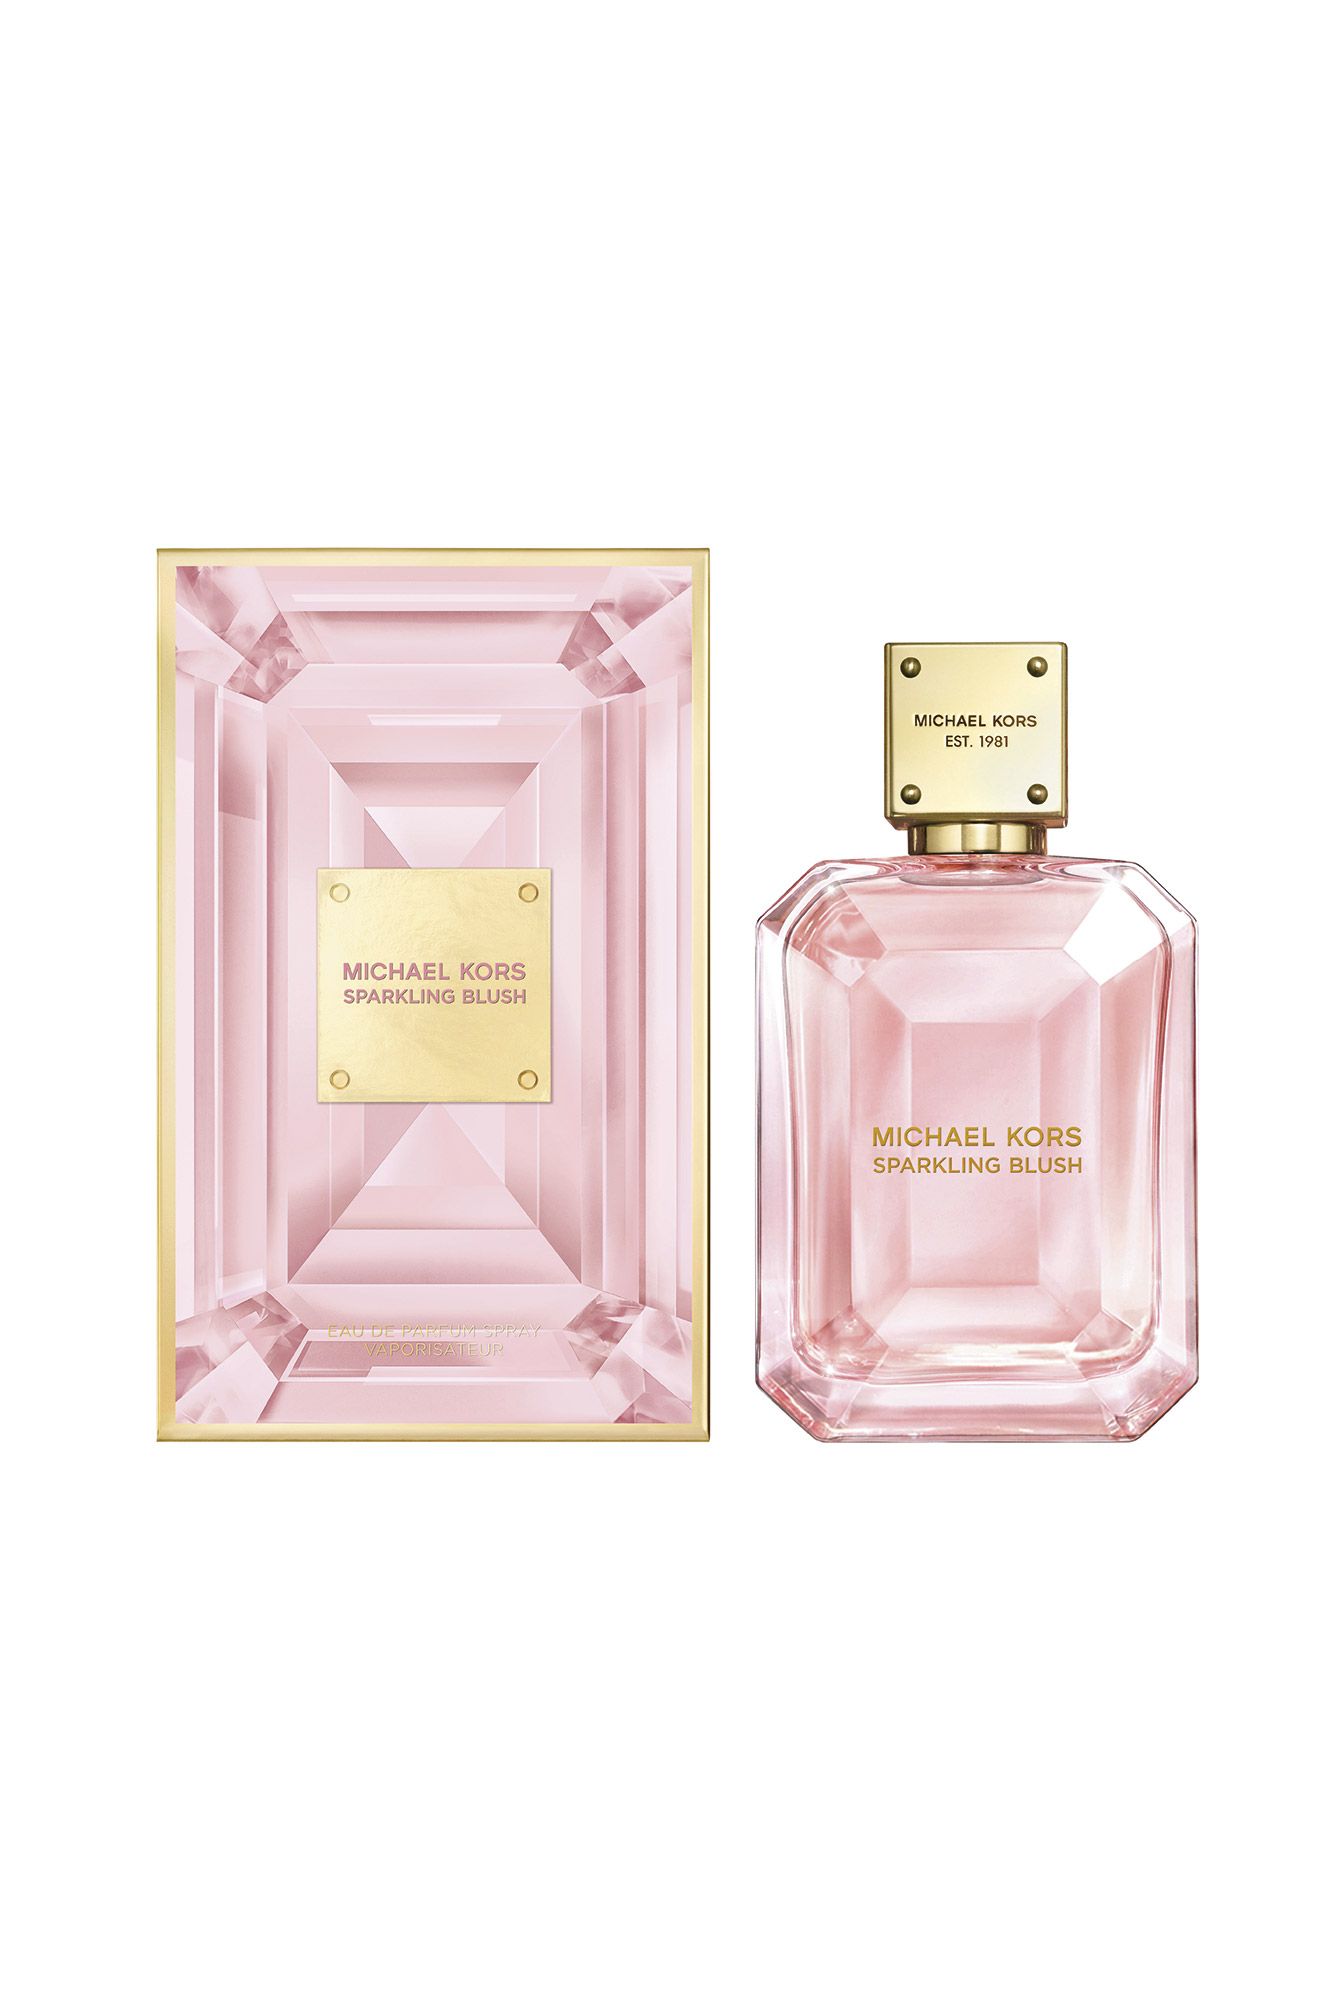 nuevo perfume givenchy mujer 2018